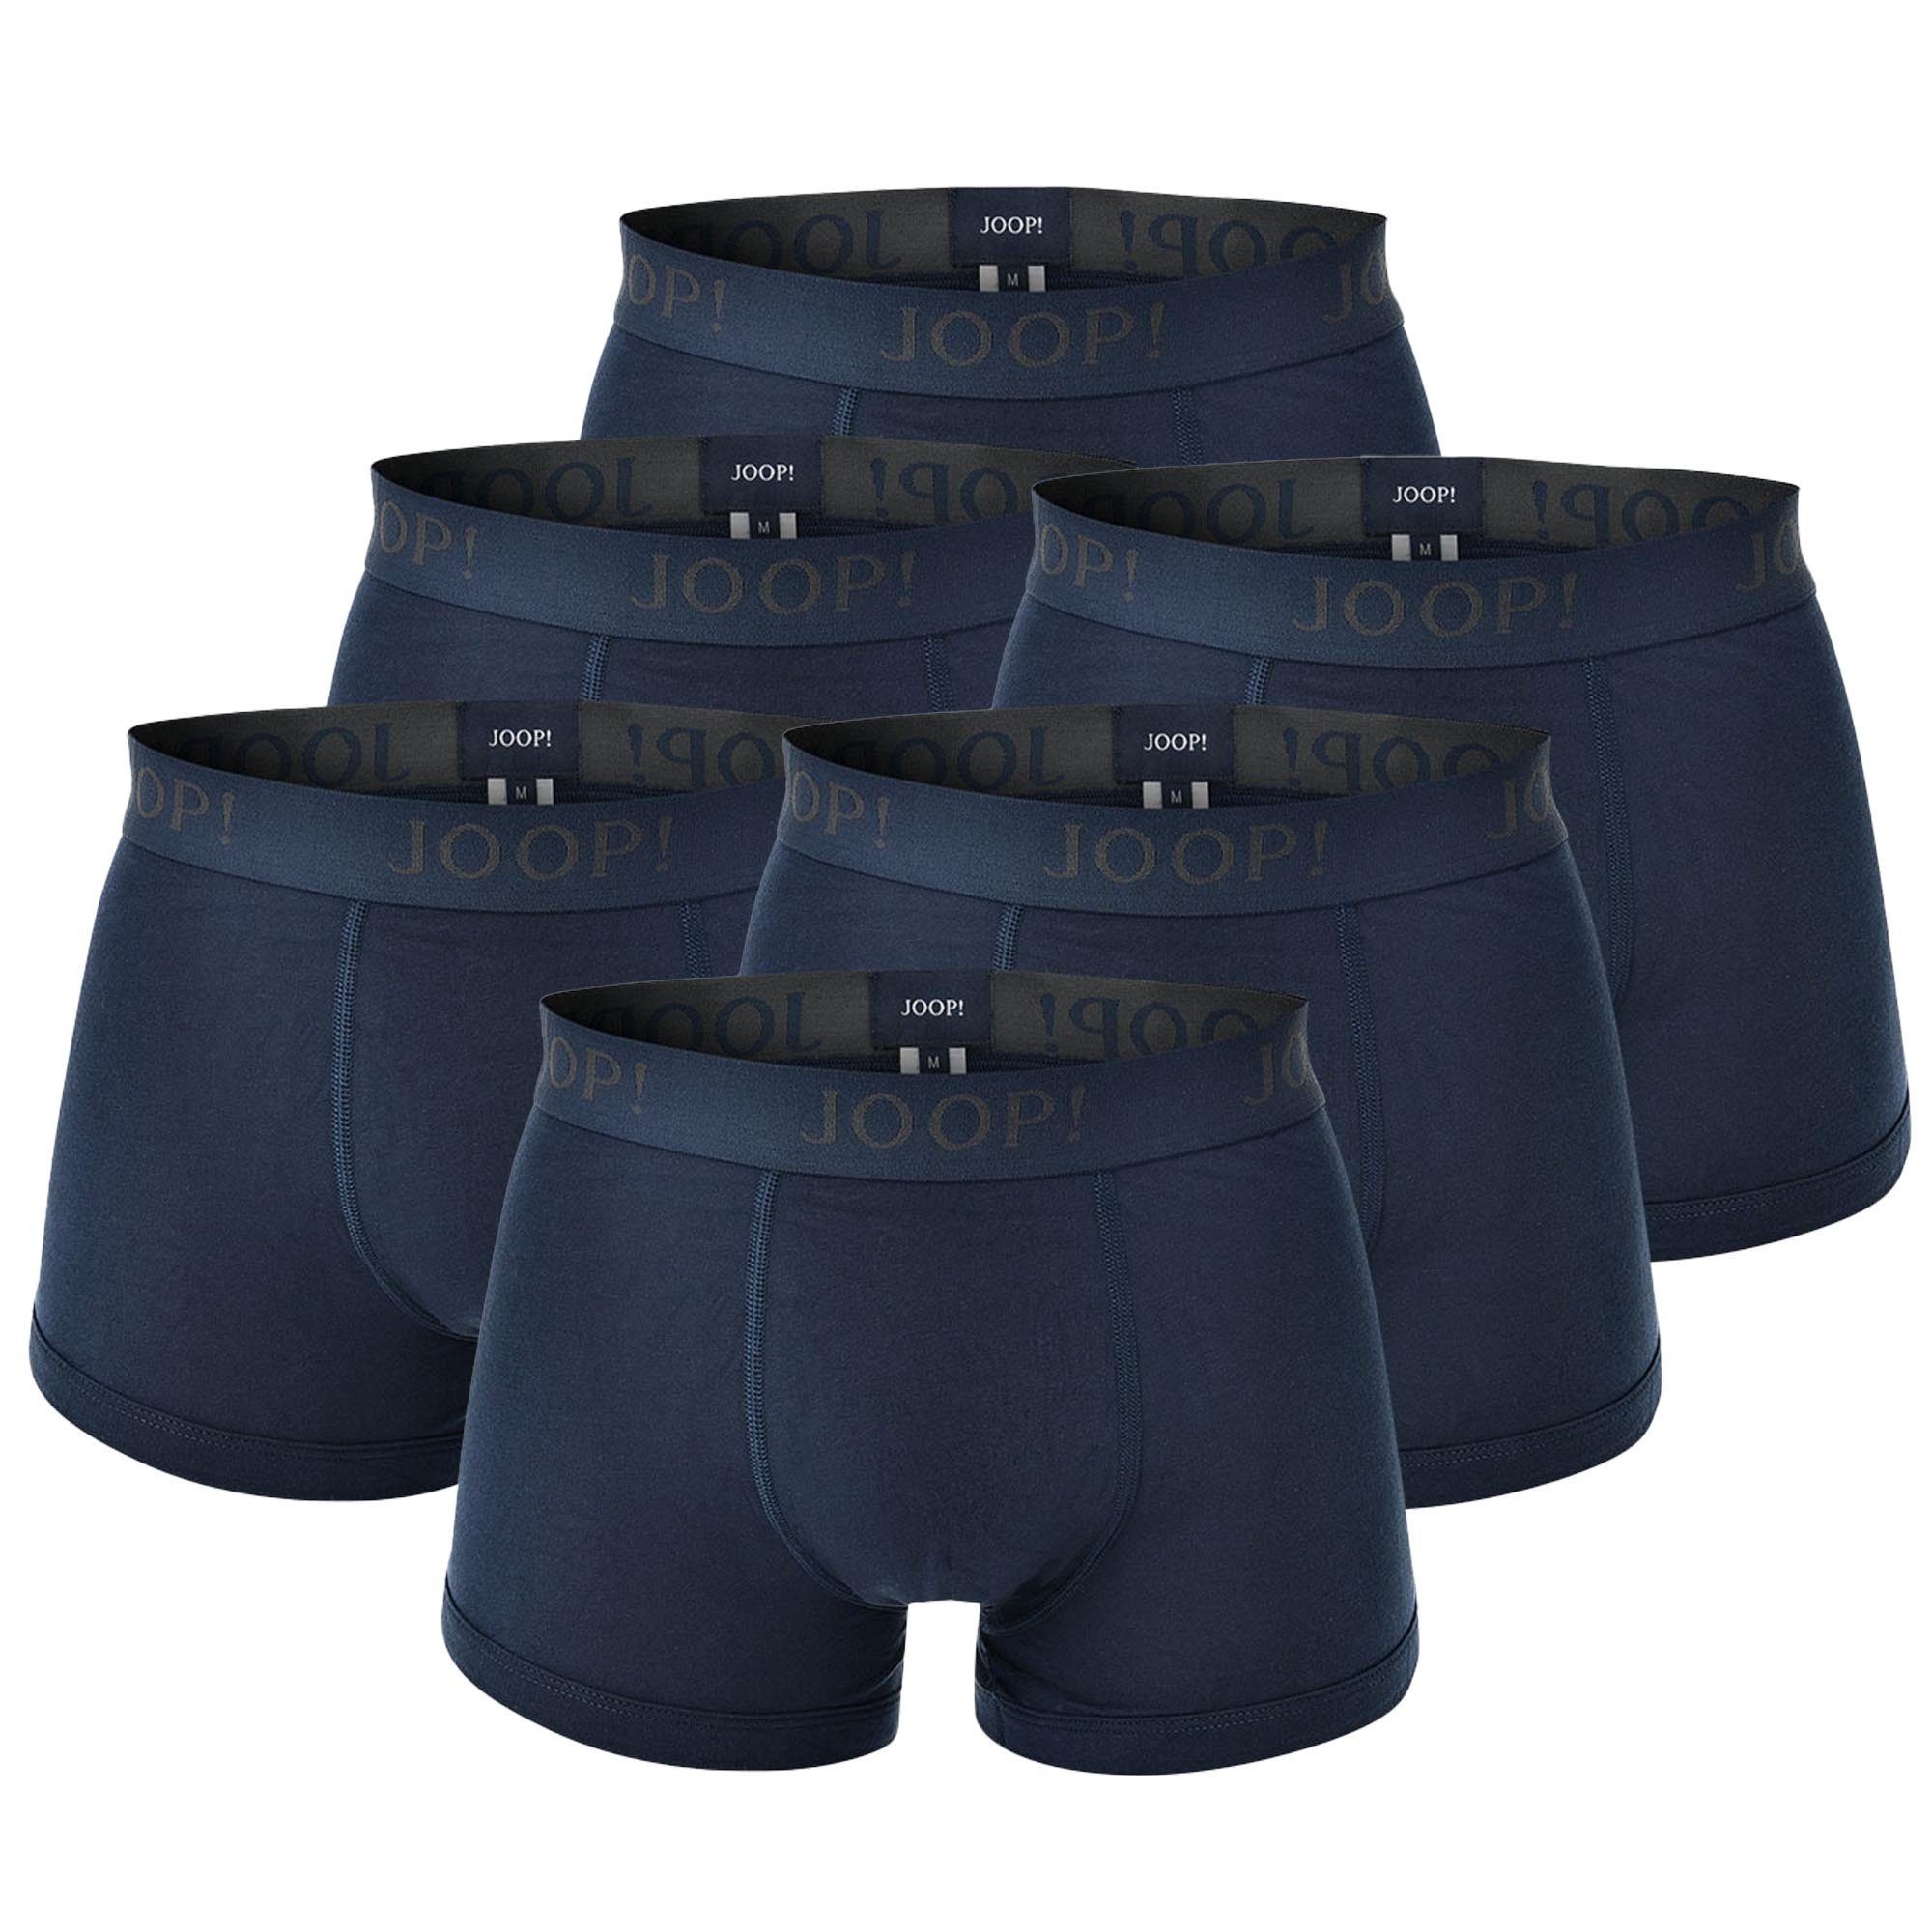 JOOP! Boxer Herren Boxer Shorts, 6er Pack - Fine Cotton